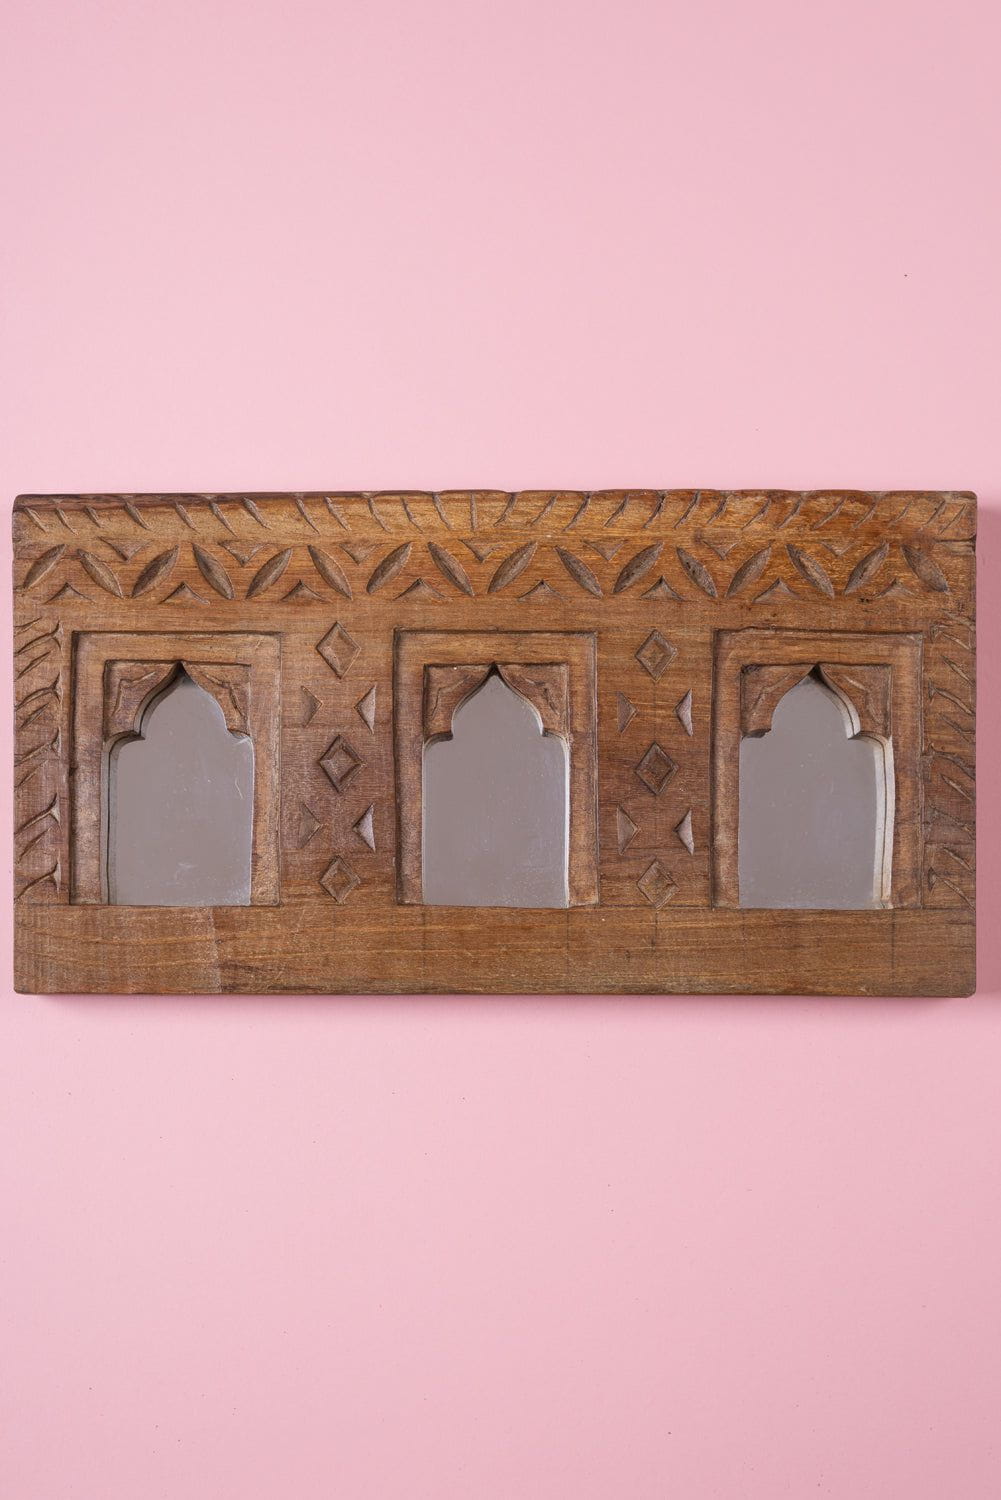 Ian Snow Ltd Vintage Wooden Triple Arch Frame - 07